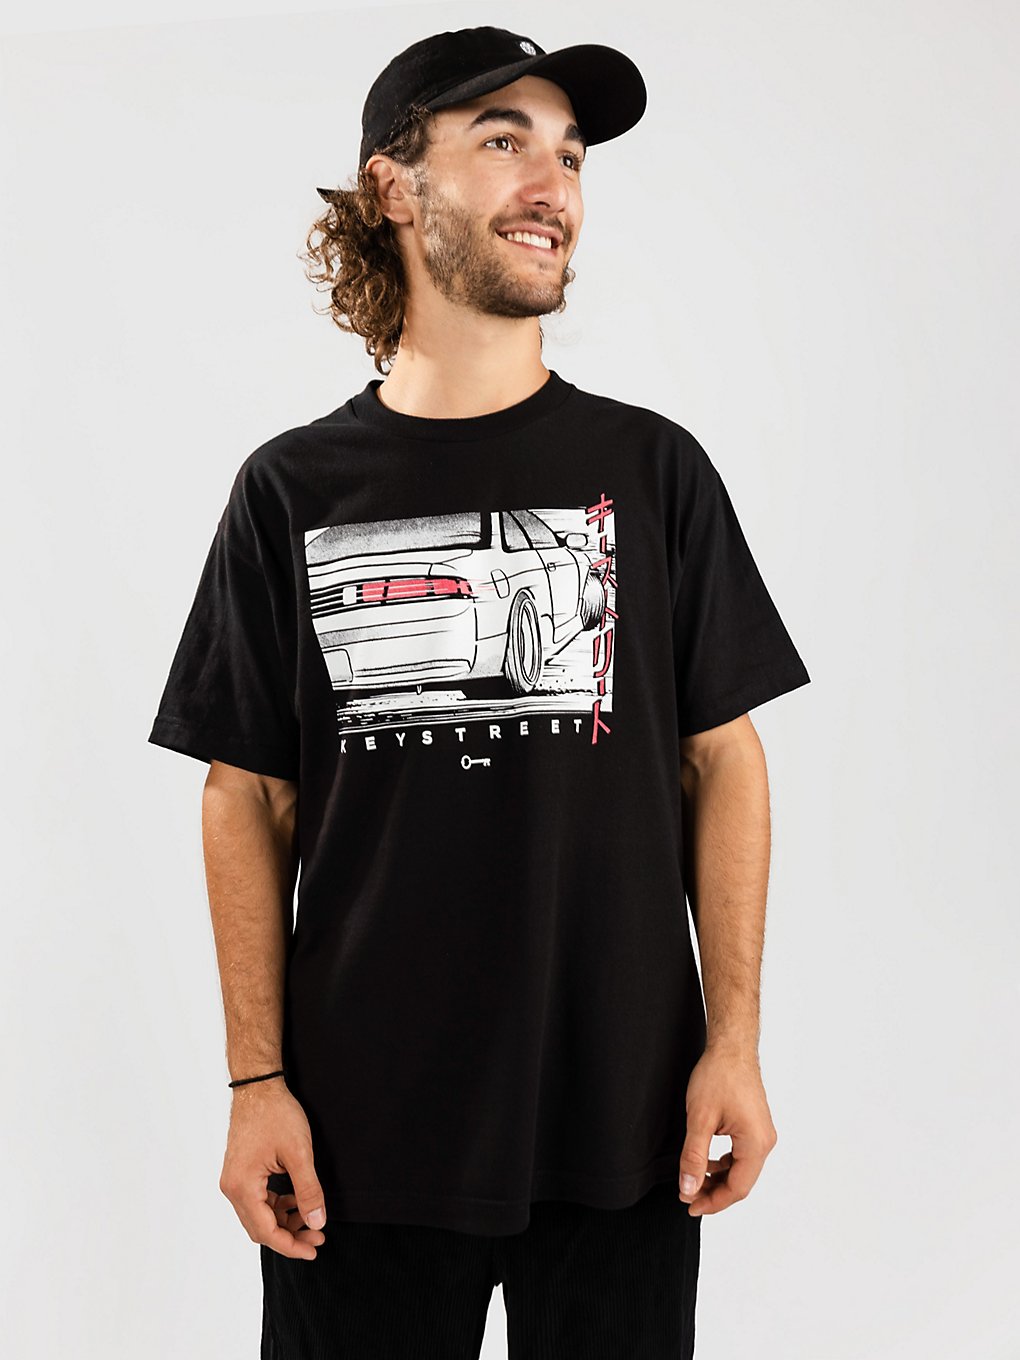 Key Street Driftin T-Shirt black kaufen